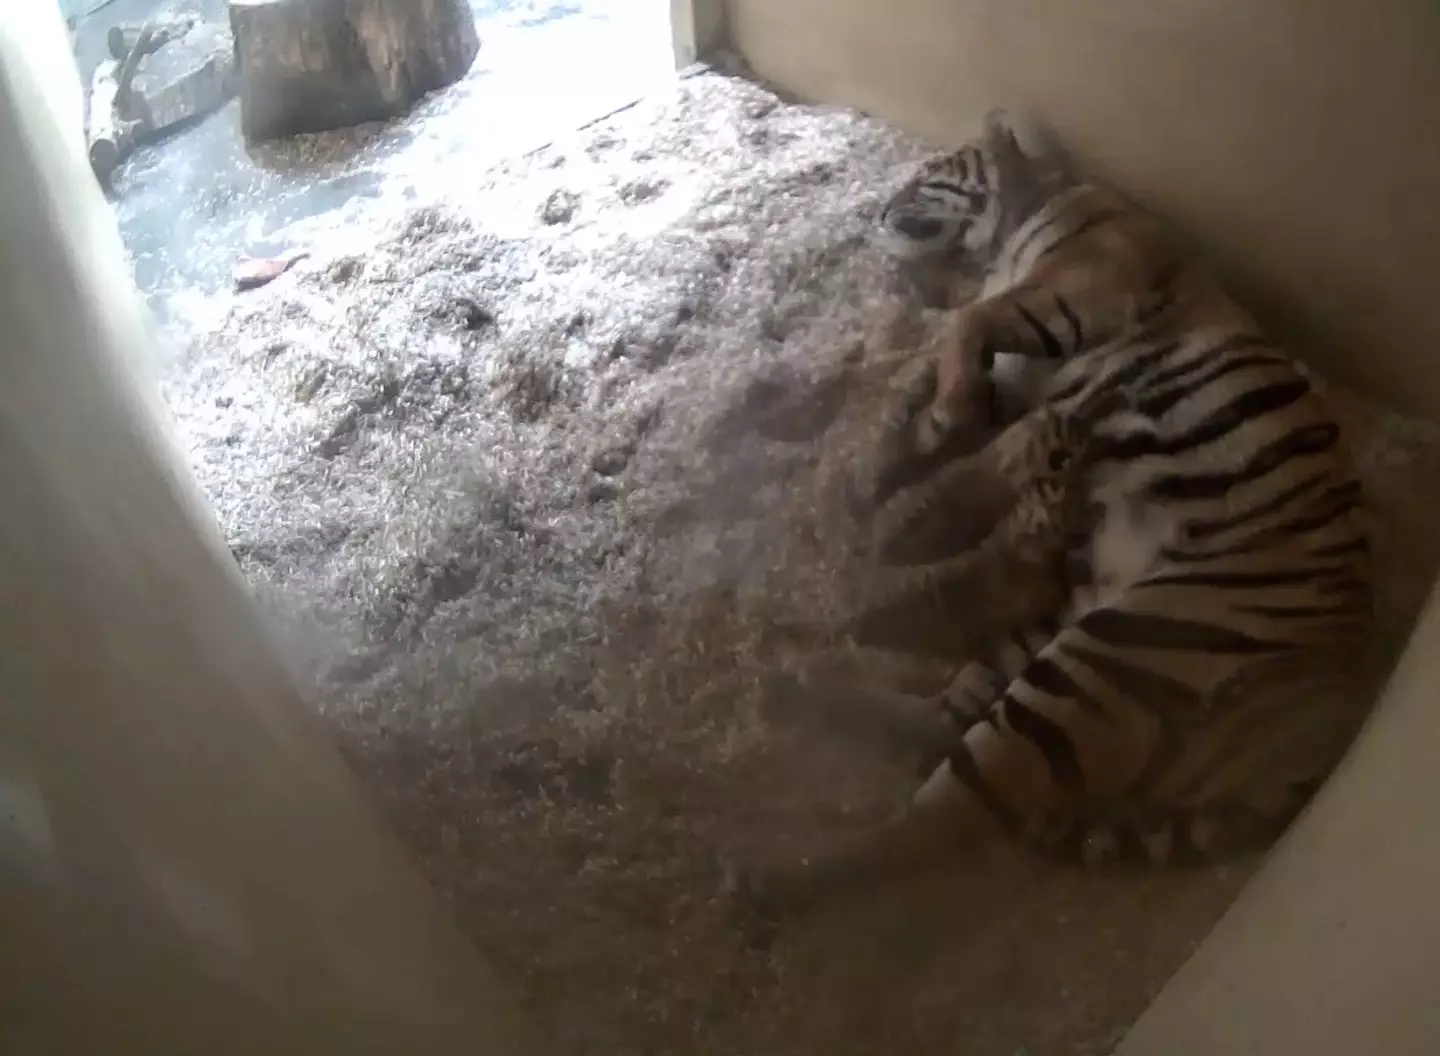 Two Sumatran tiger cubs have been born at Chester Zoo.